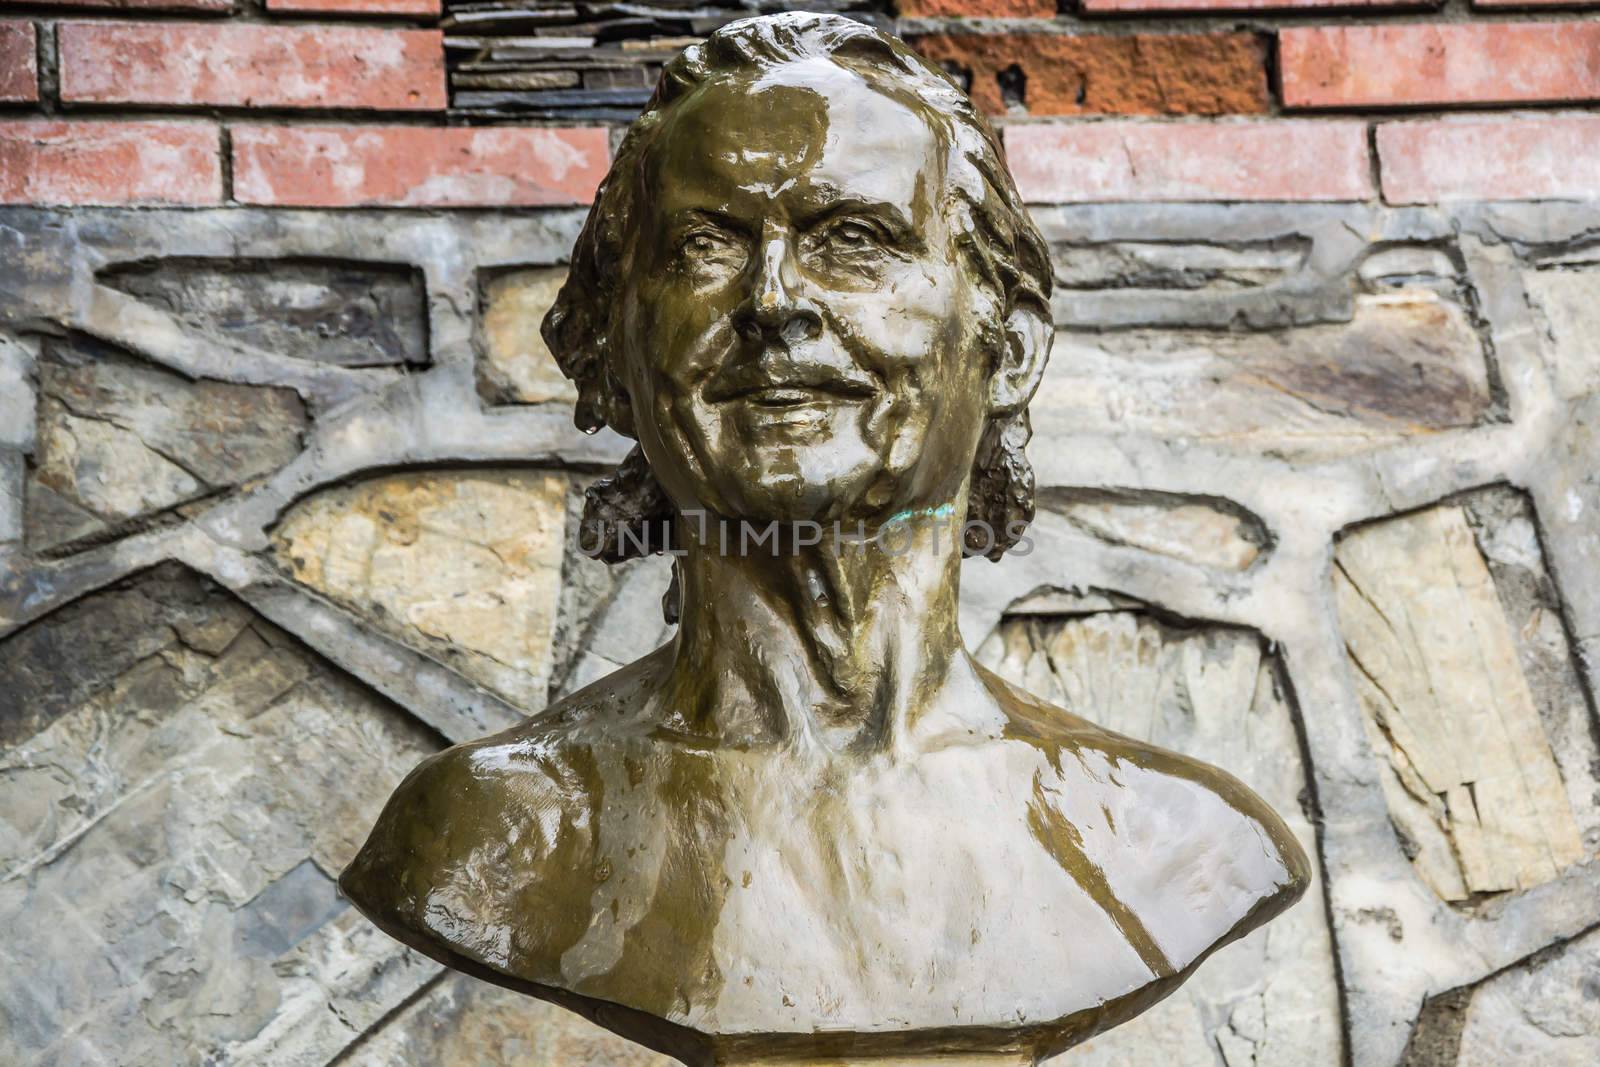 Monument to Thor Heyerdahl by pawel_szczepanski